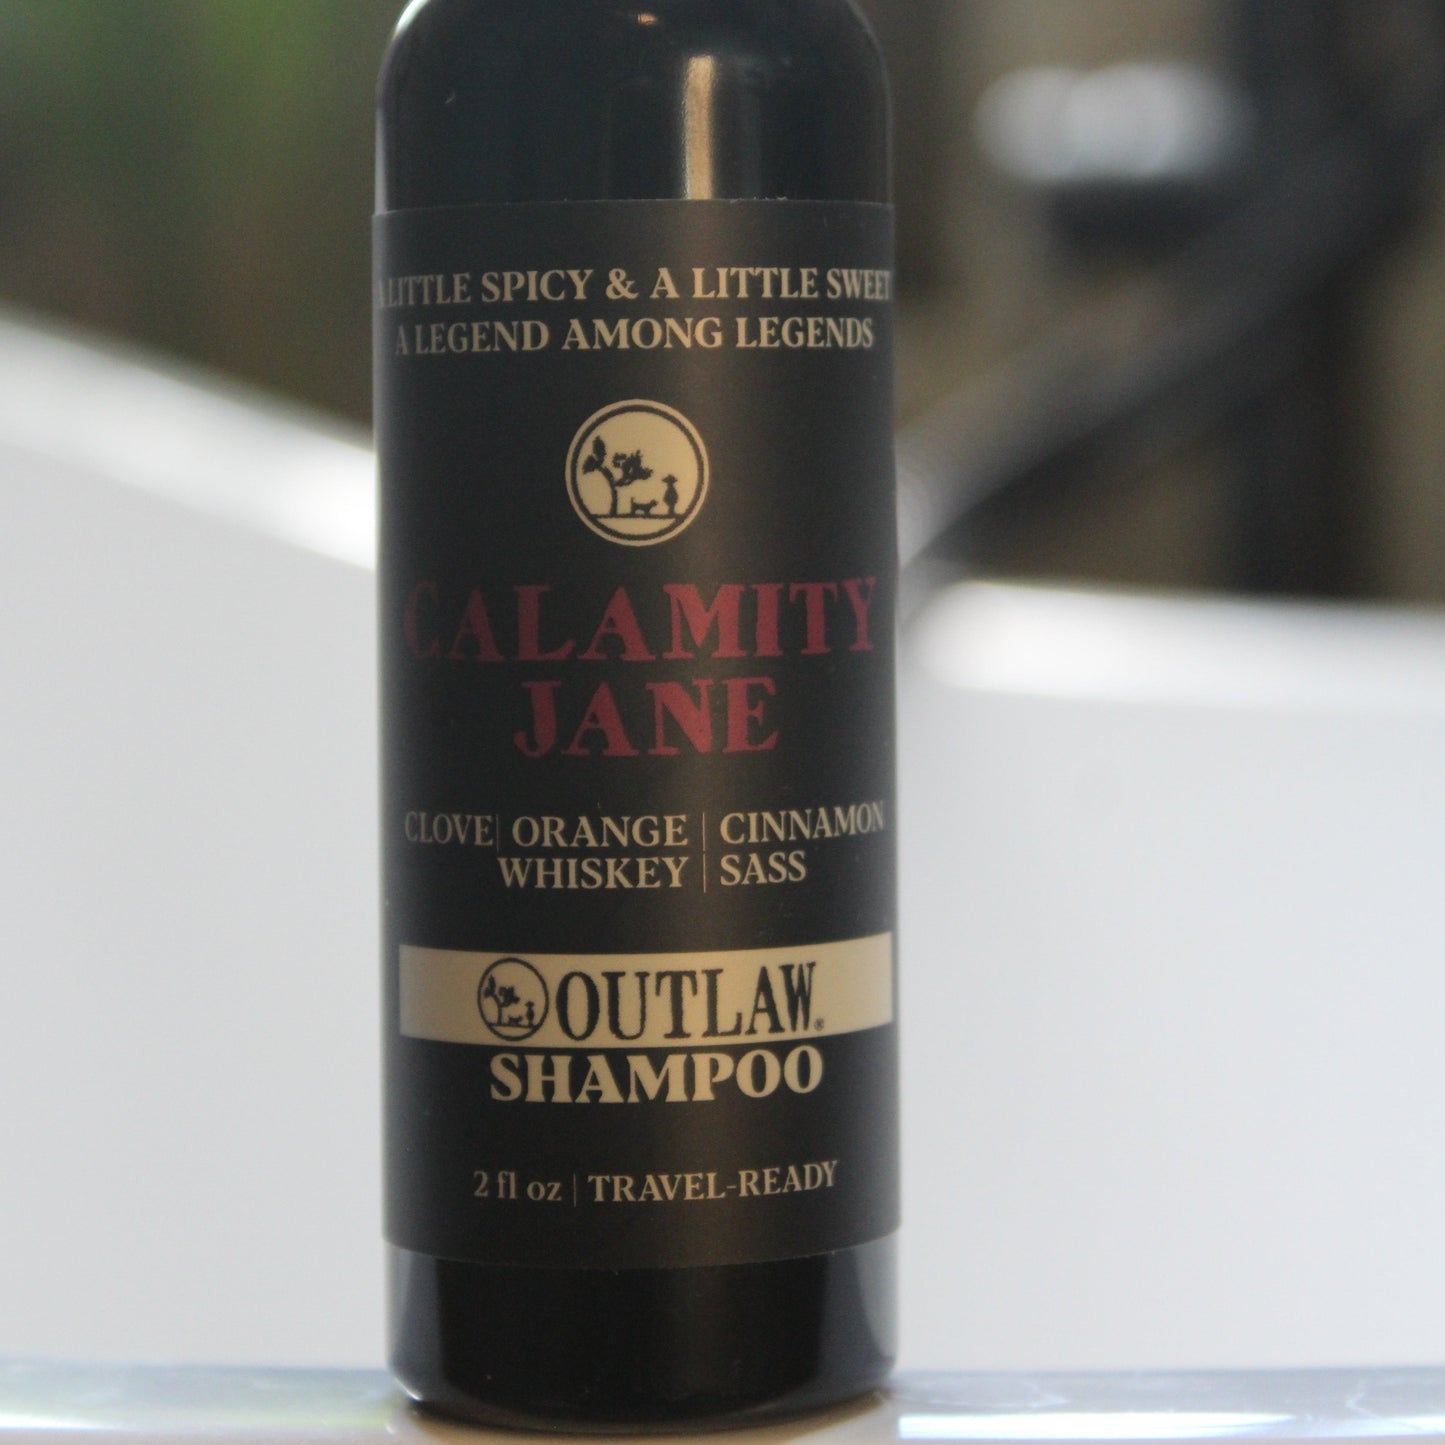 Calamity Jane Travel Size Shampoo